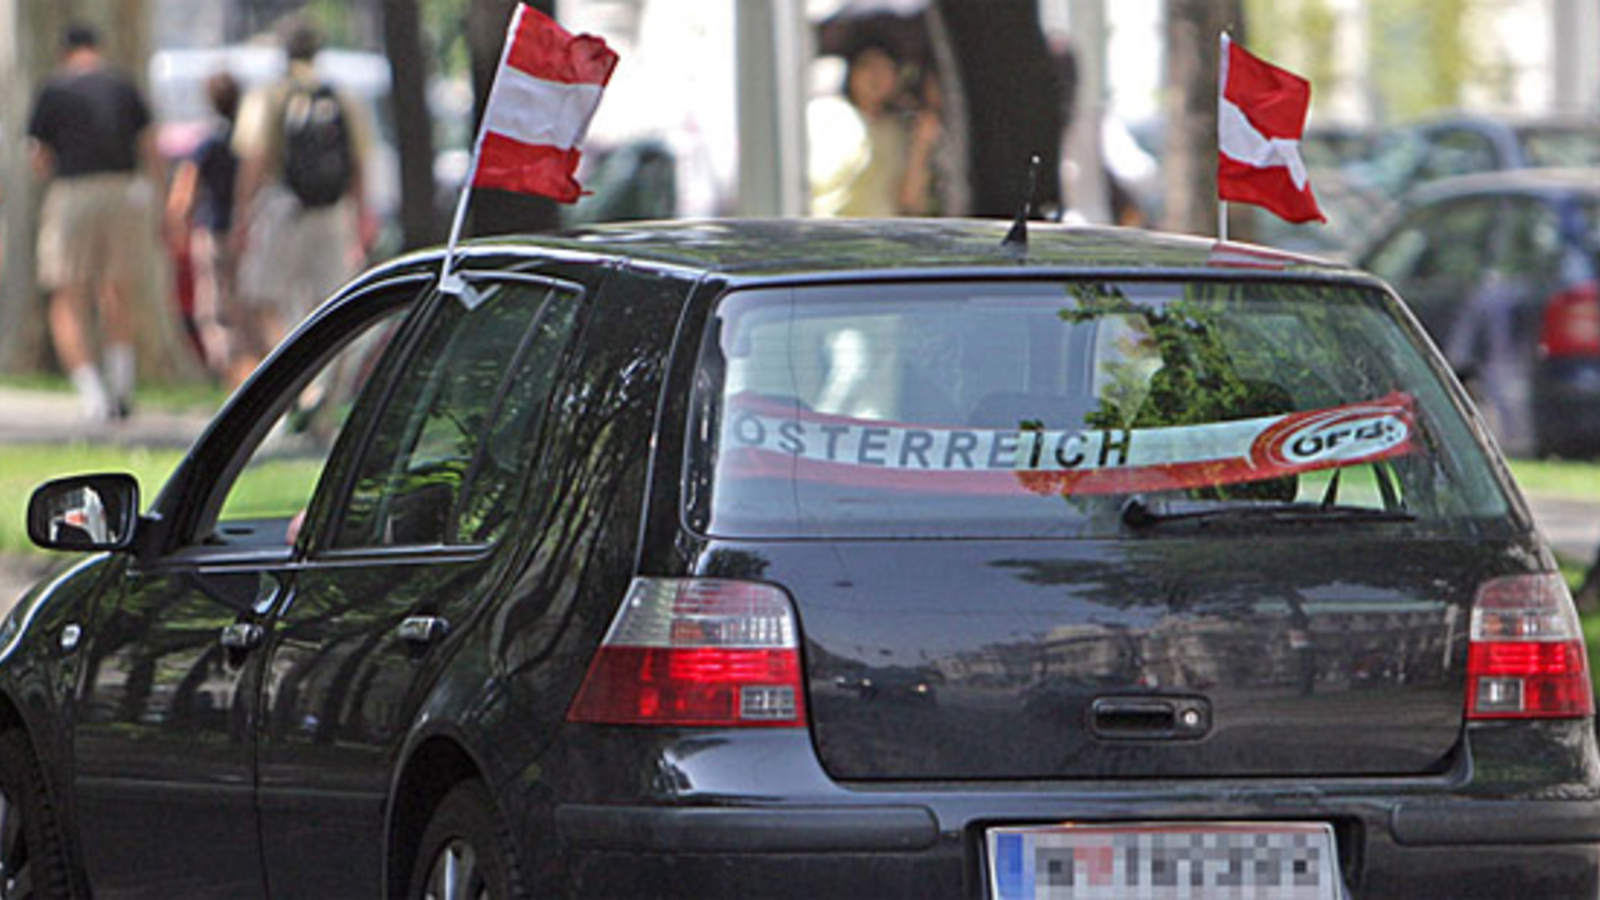 Stockerau - Österreich-Fahne am PKW: Patriot zahlte Bußgeld - NÖN.at